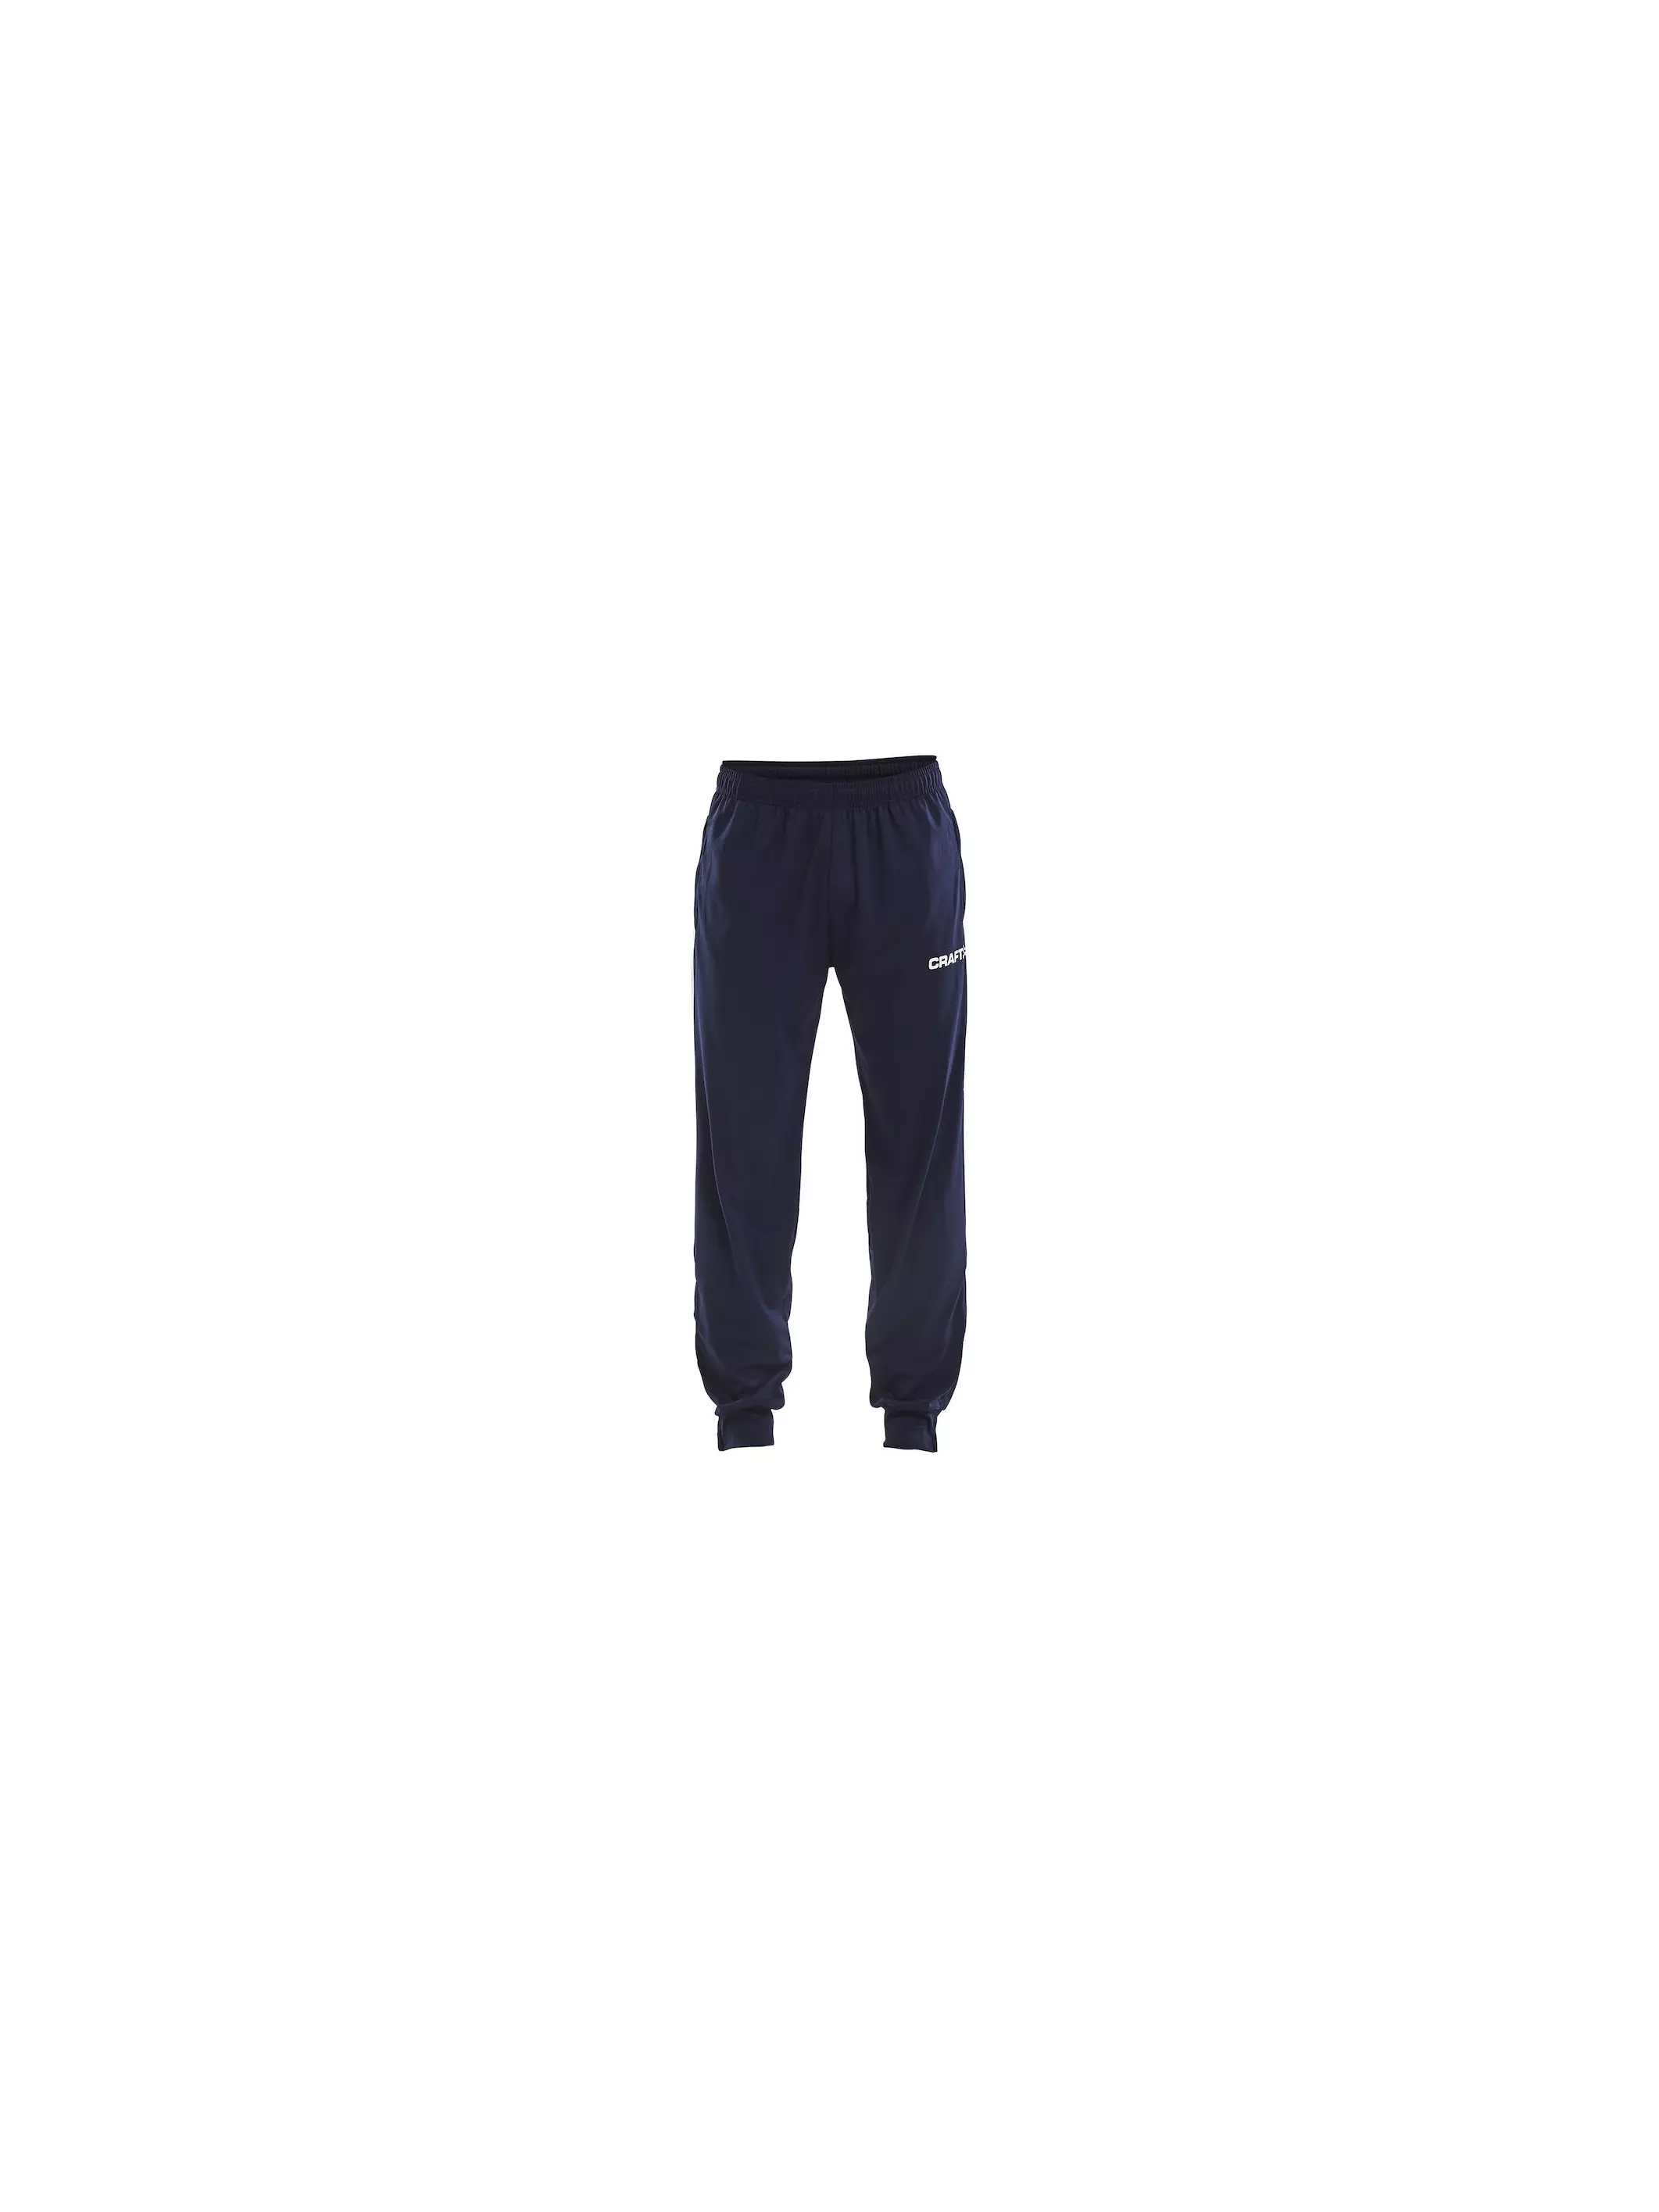 Pantalons & Collants Craft CRAFT PROGRESS PANT STRAIGHT M - 1905981